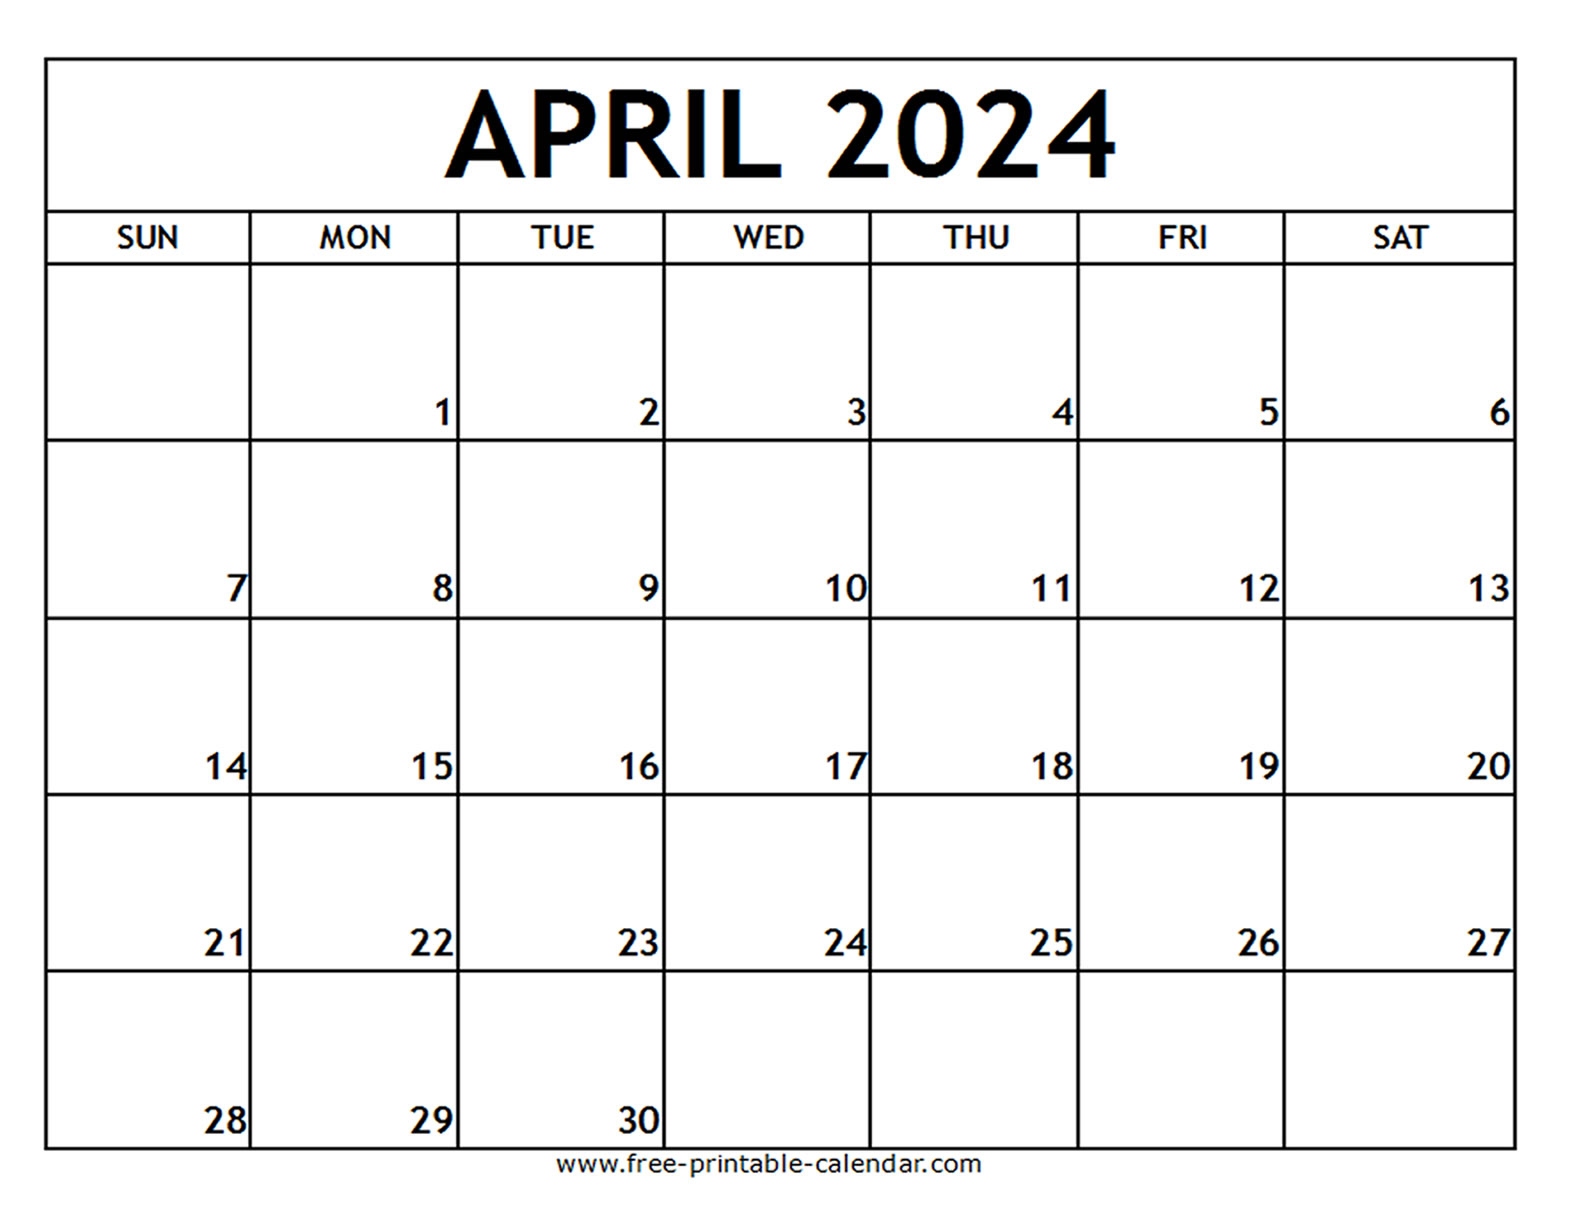 April 2024 Printable Calendar - Free-Printable-Calendar in Free Printable Calendar 2024 April Thru December